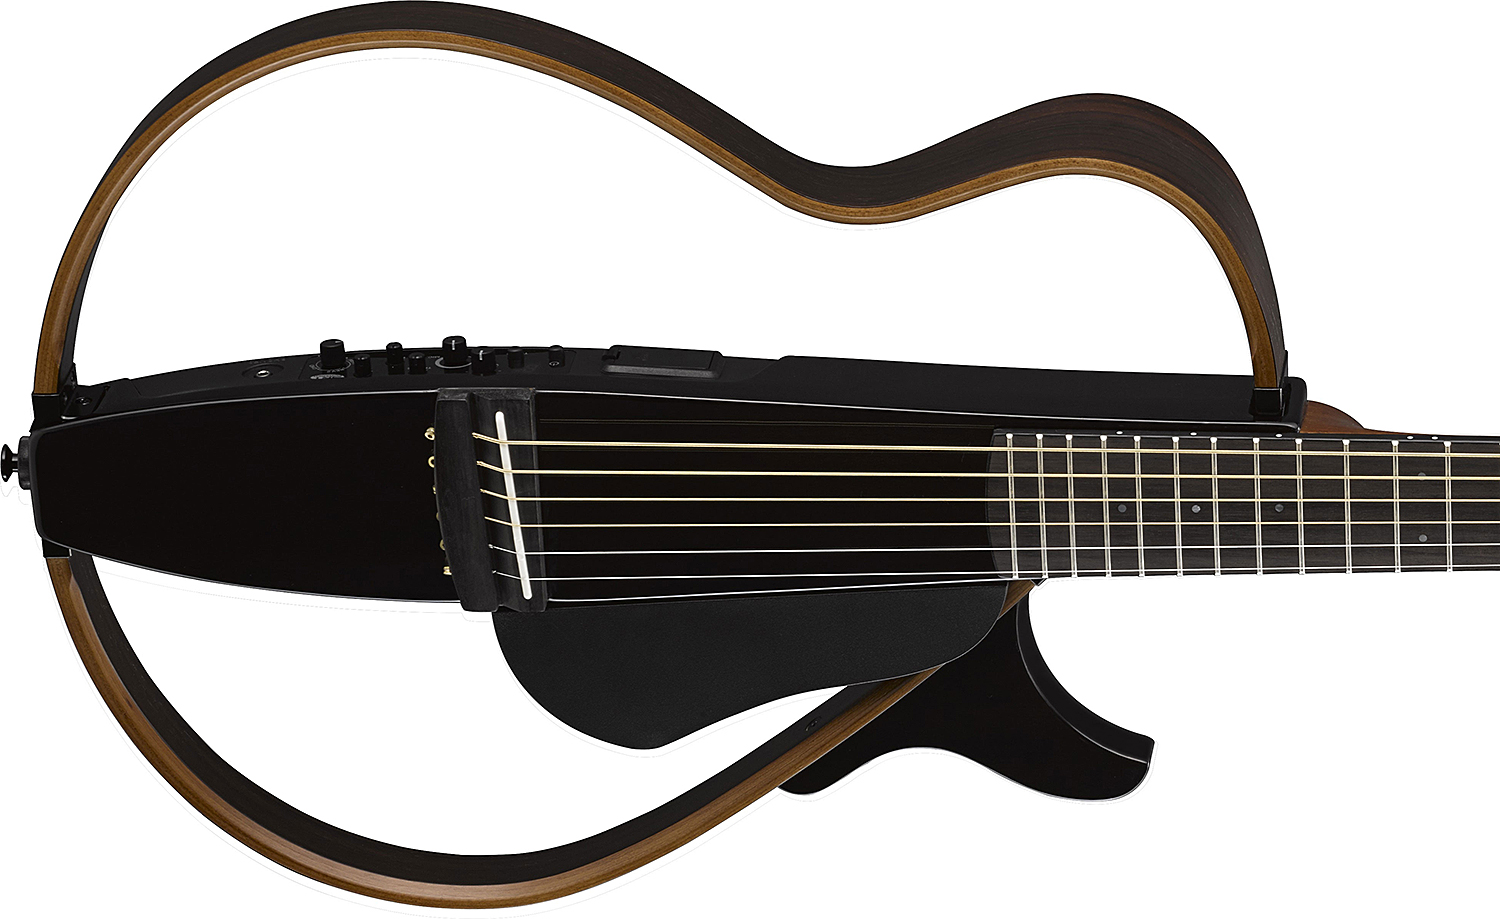 Yamaha Silent Guitar Slg200s - Translucent Black - Electro acoustic guitar - Variation 2